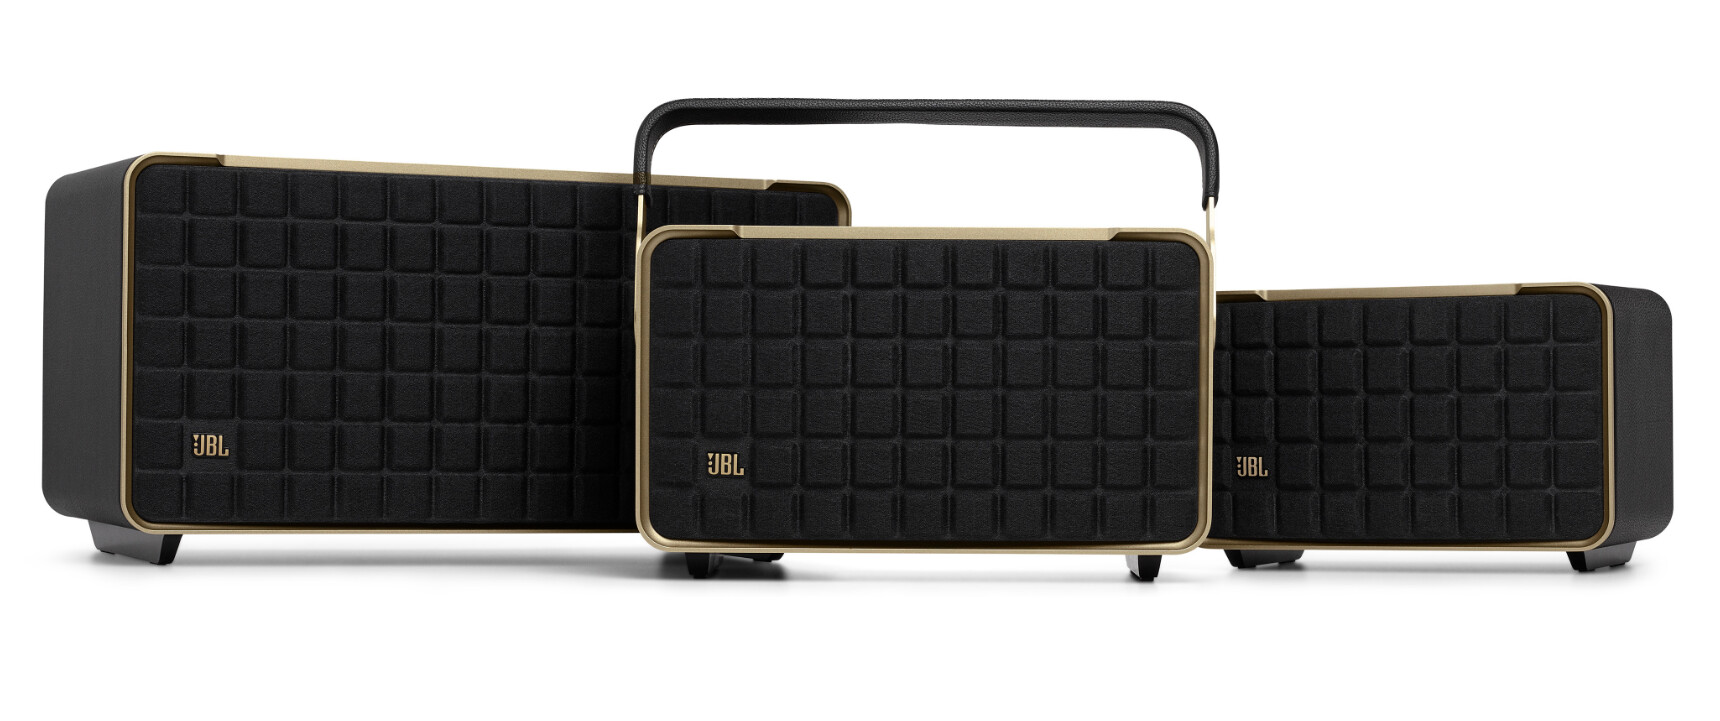 JBL TechPowerUp the Announces Series of Portable Speakers Authentics |